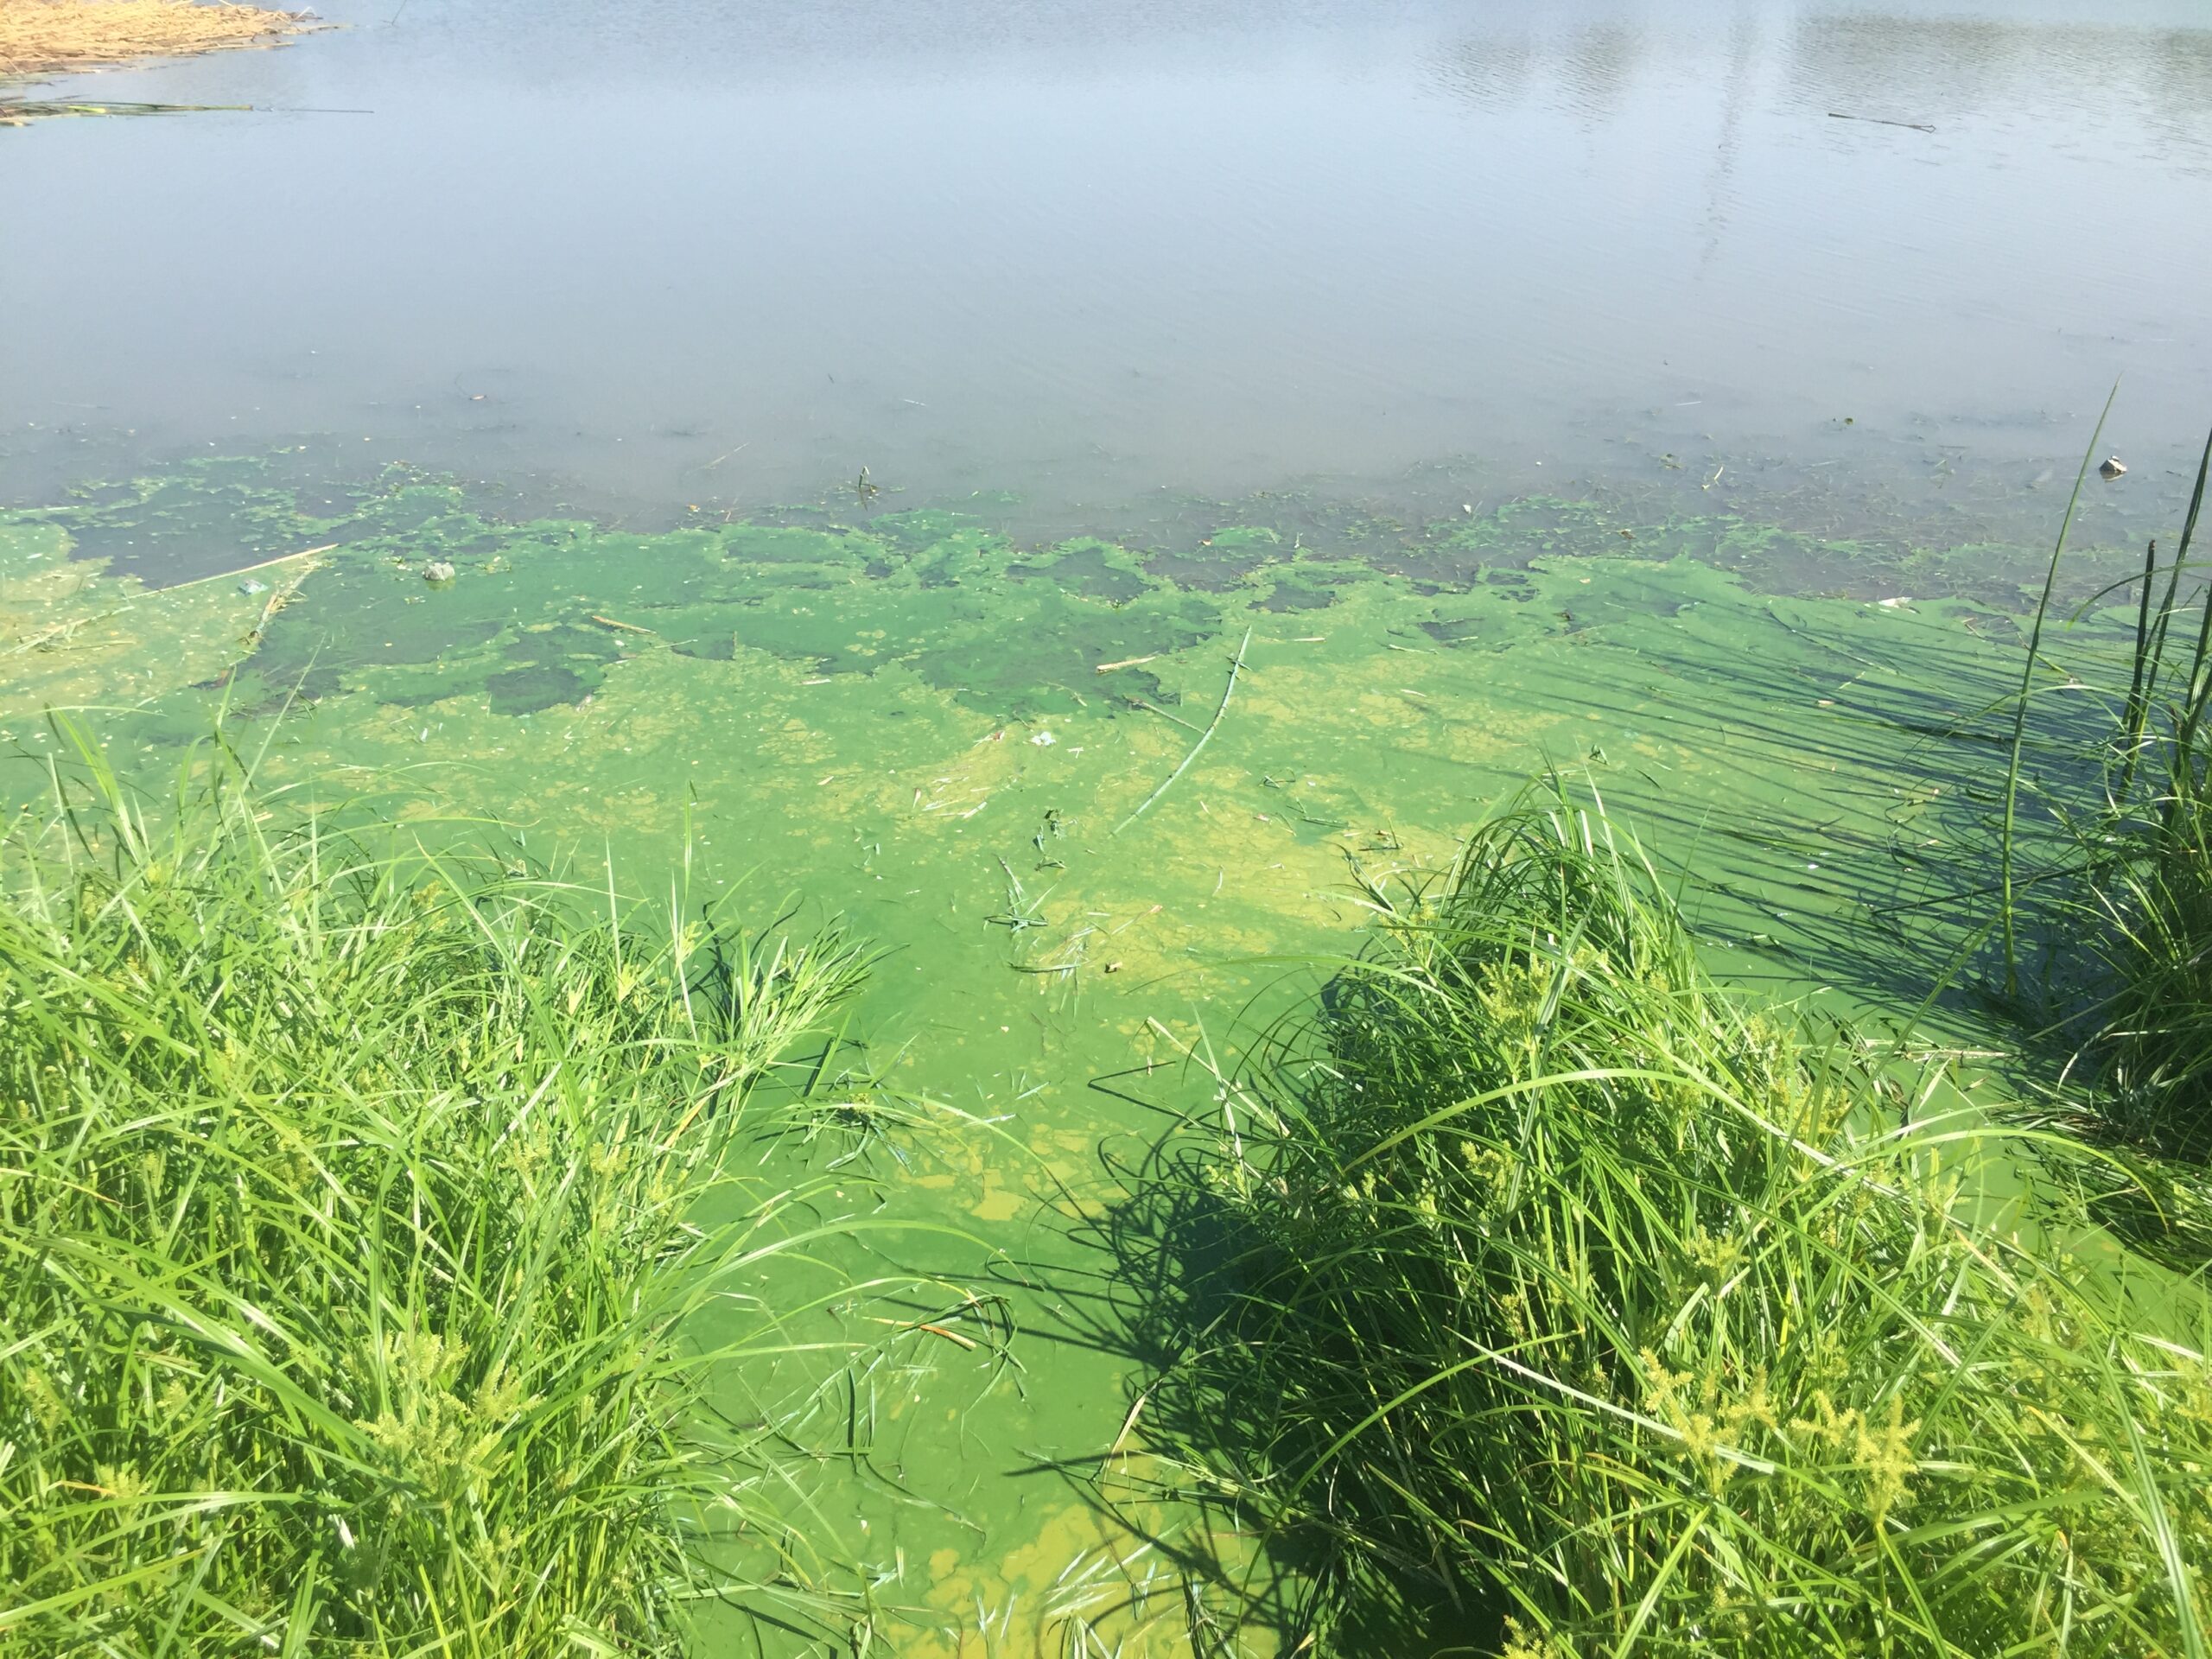 Cyanobacteria topic of July 23 webinar